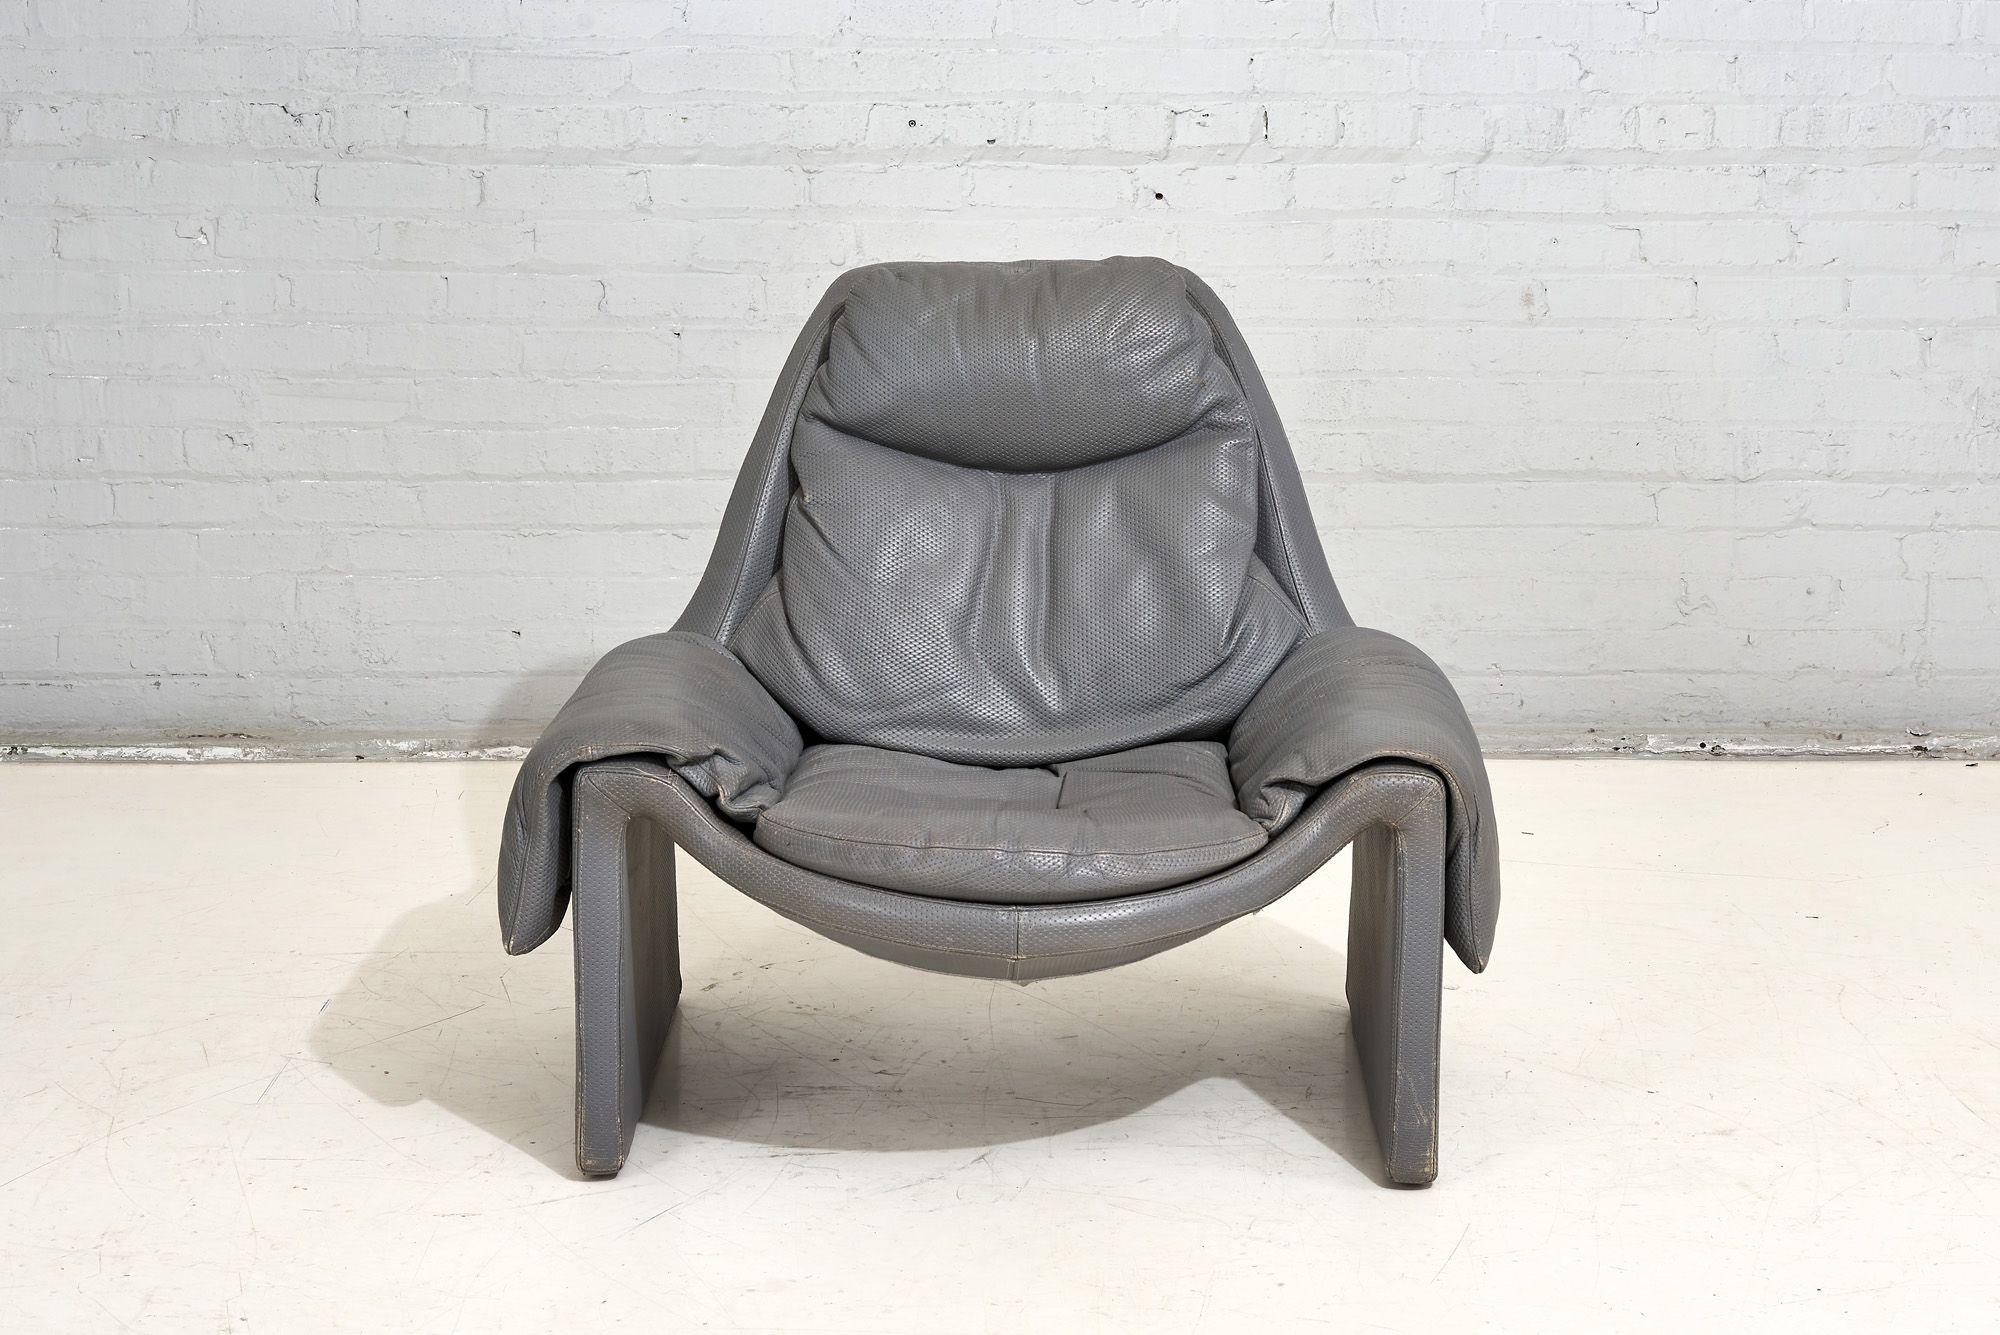 Saporiti Italia Vittorio Introini P60 Lounge chair by Proposals, Italy 1970. Gray leather beautiful patina.